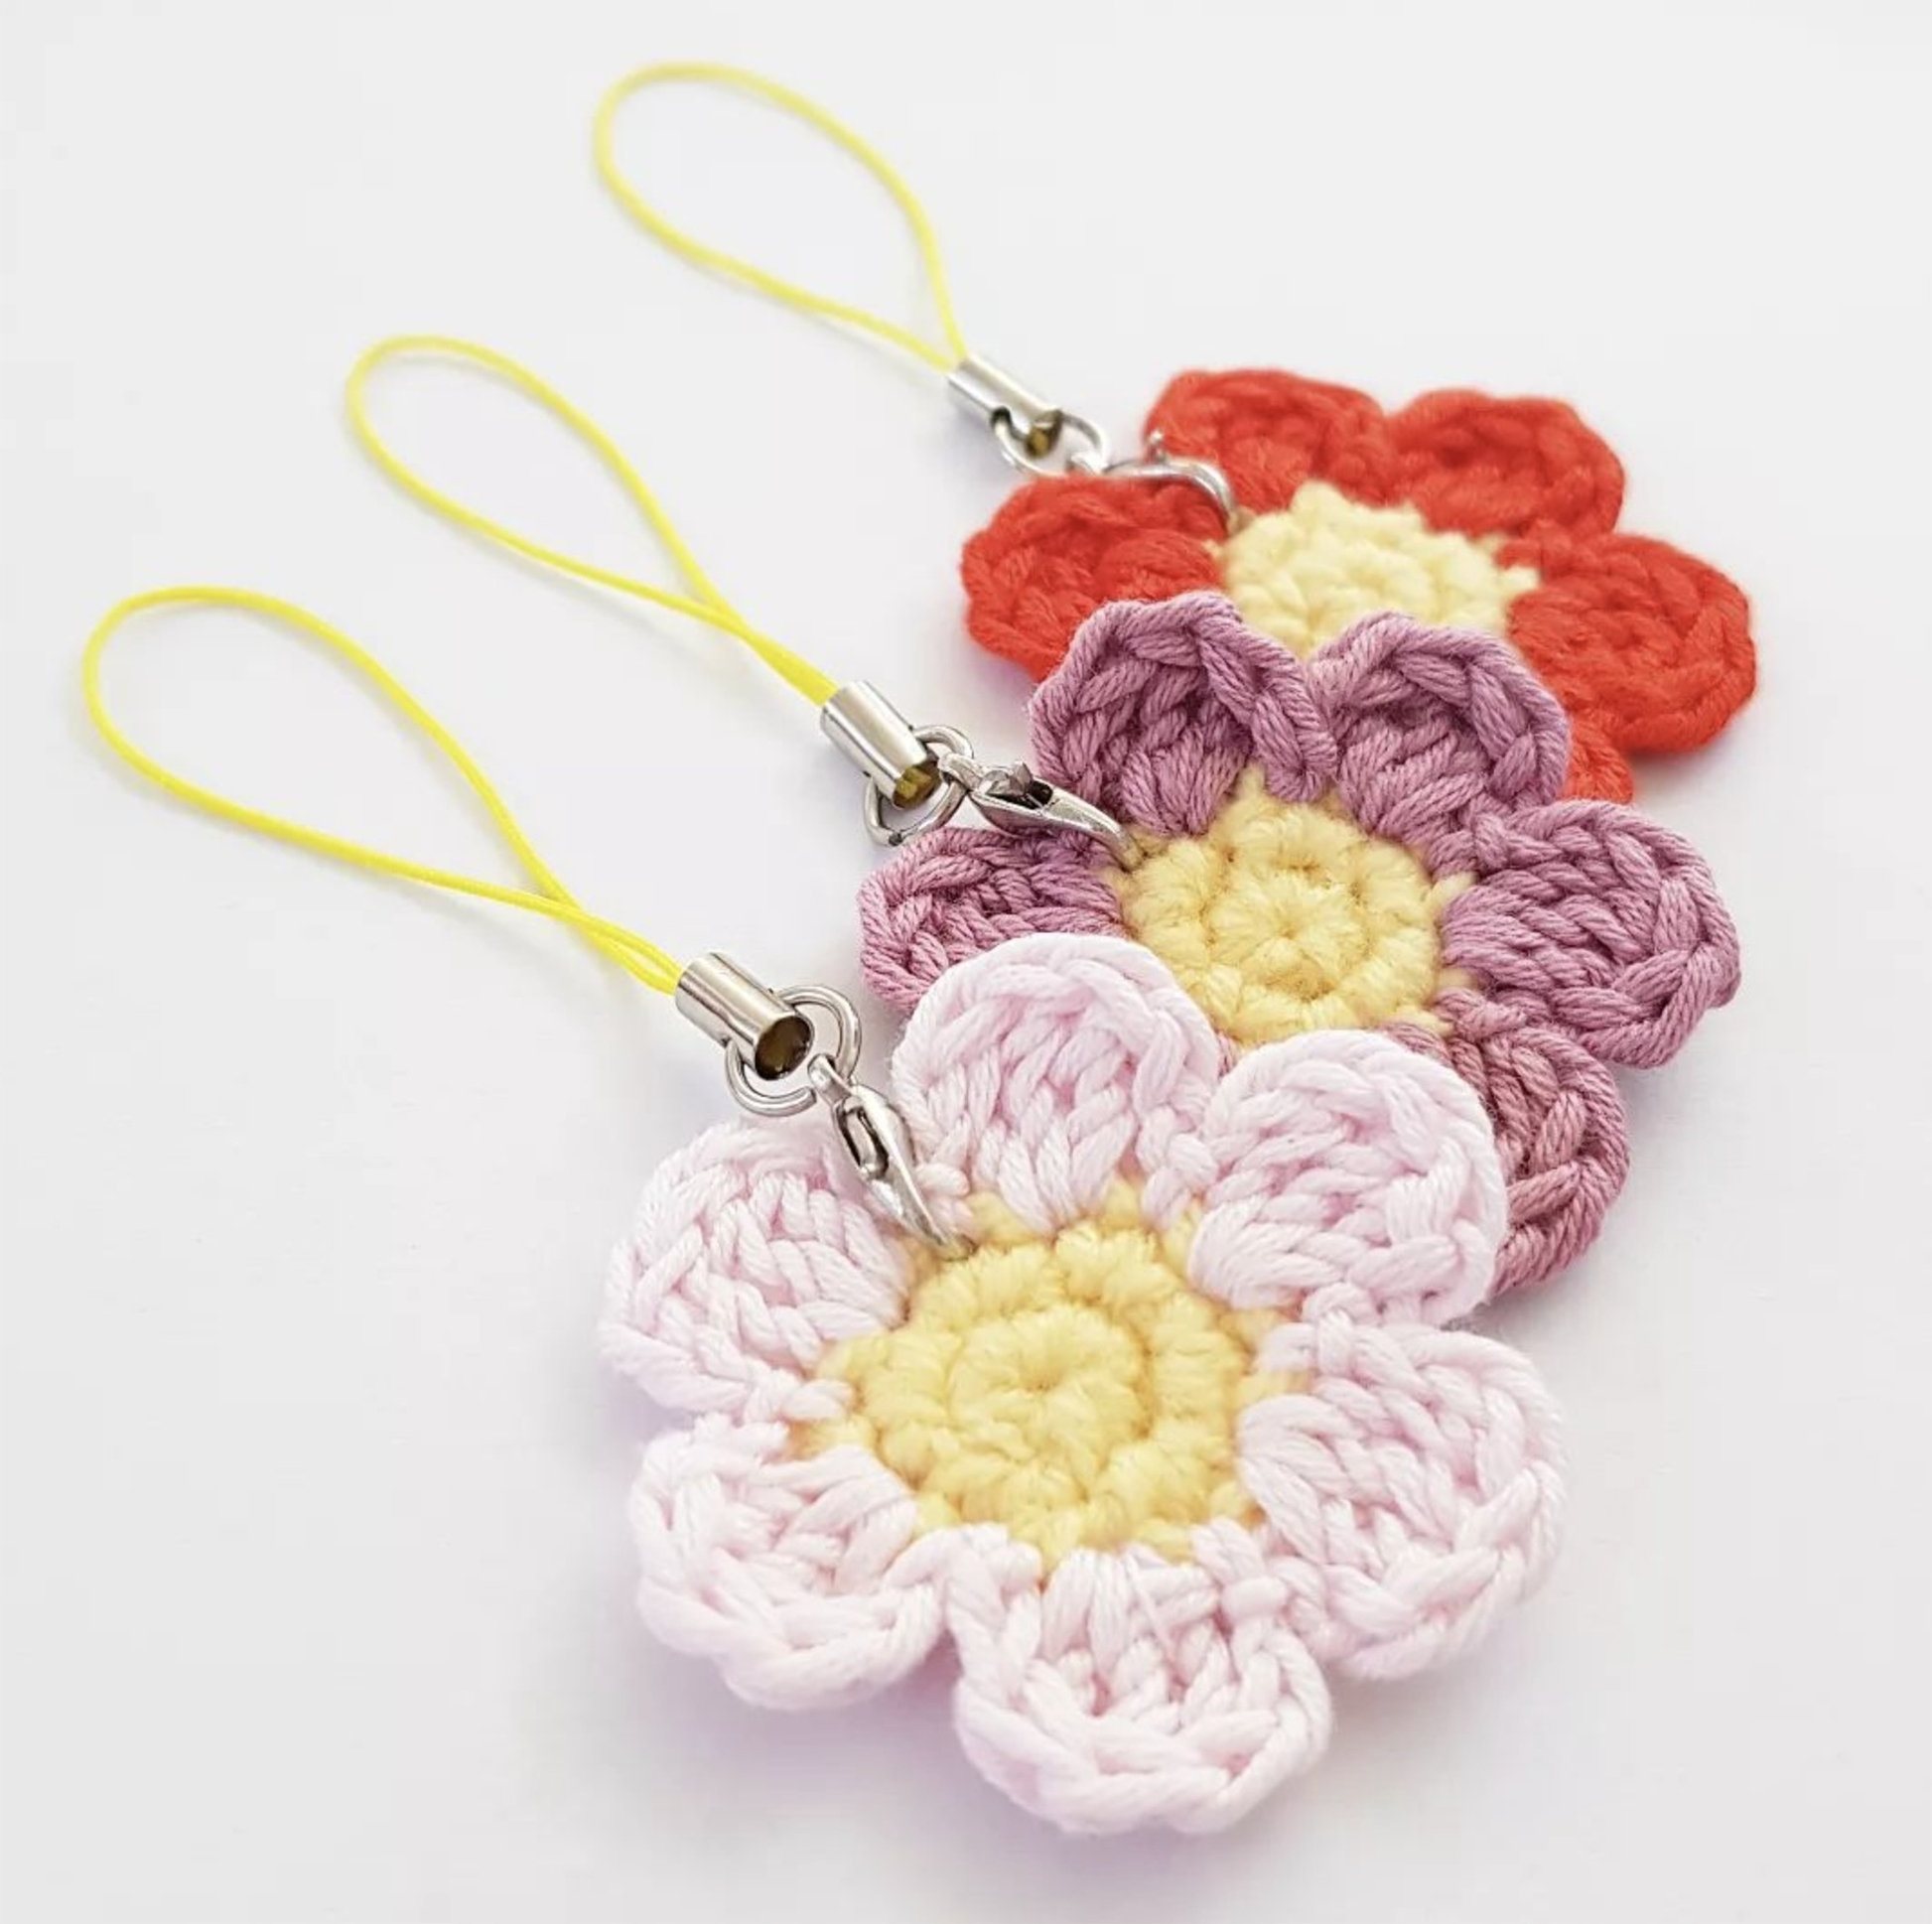 "Joyful Handmade Treasures: Crochet Flower Keychains from CocoFlower"